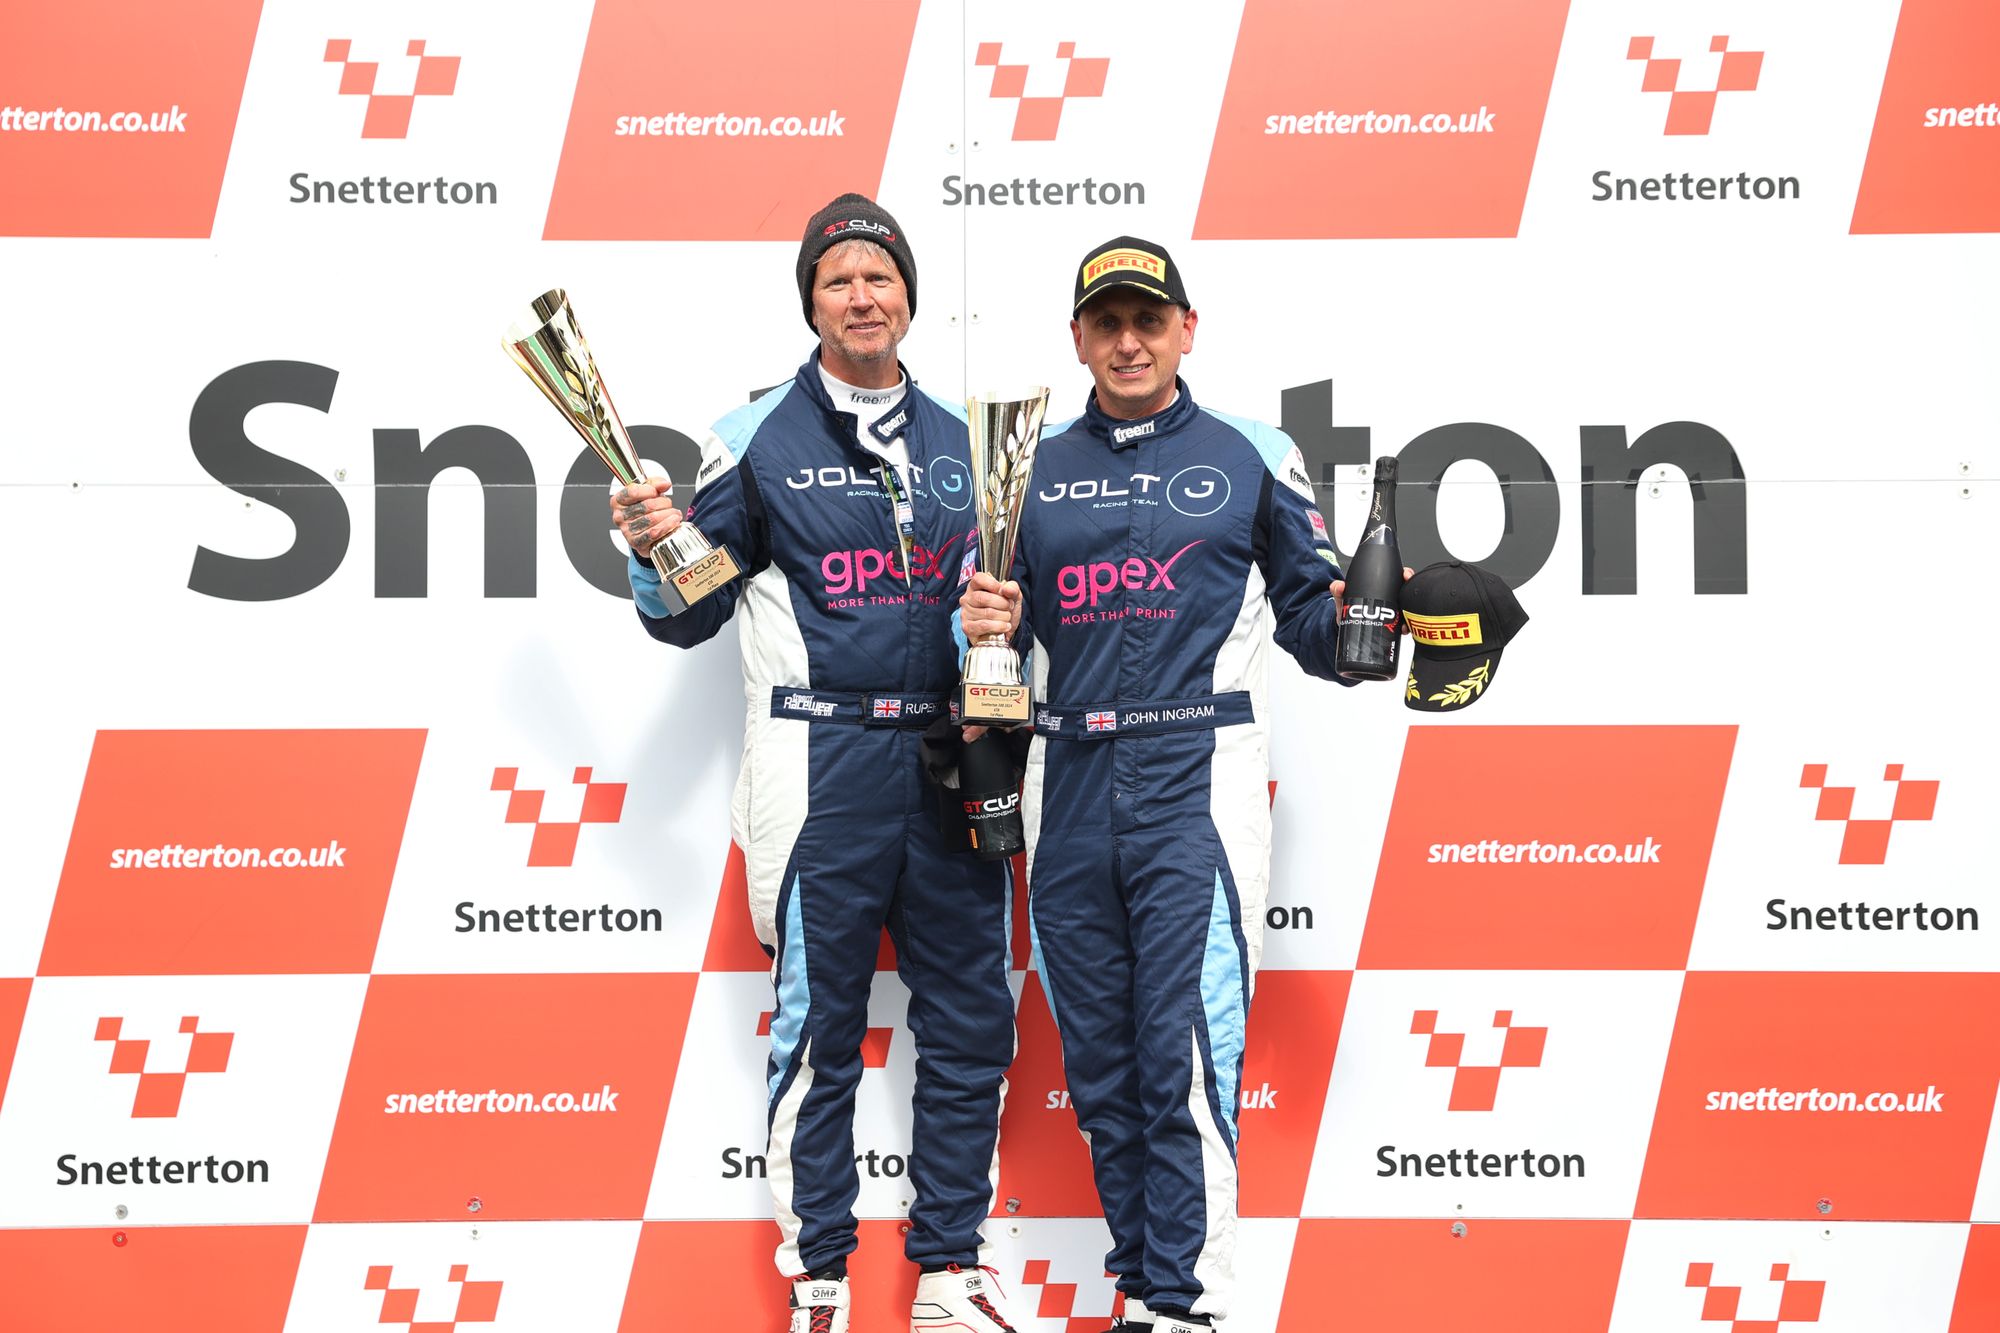 Quadruple Podium Success at Snetterton for Jolt Racing